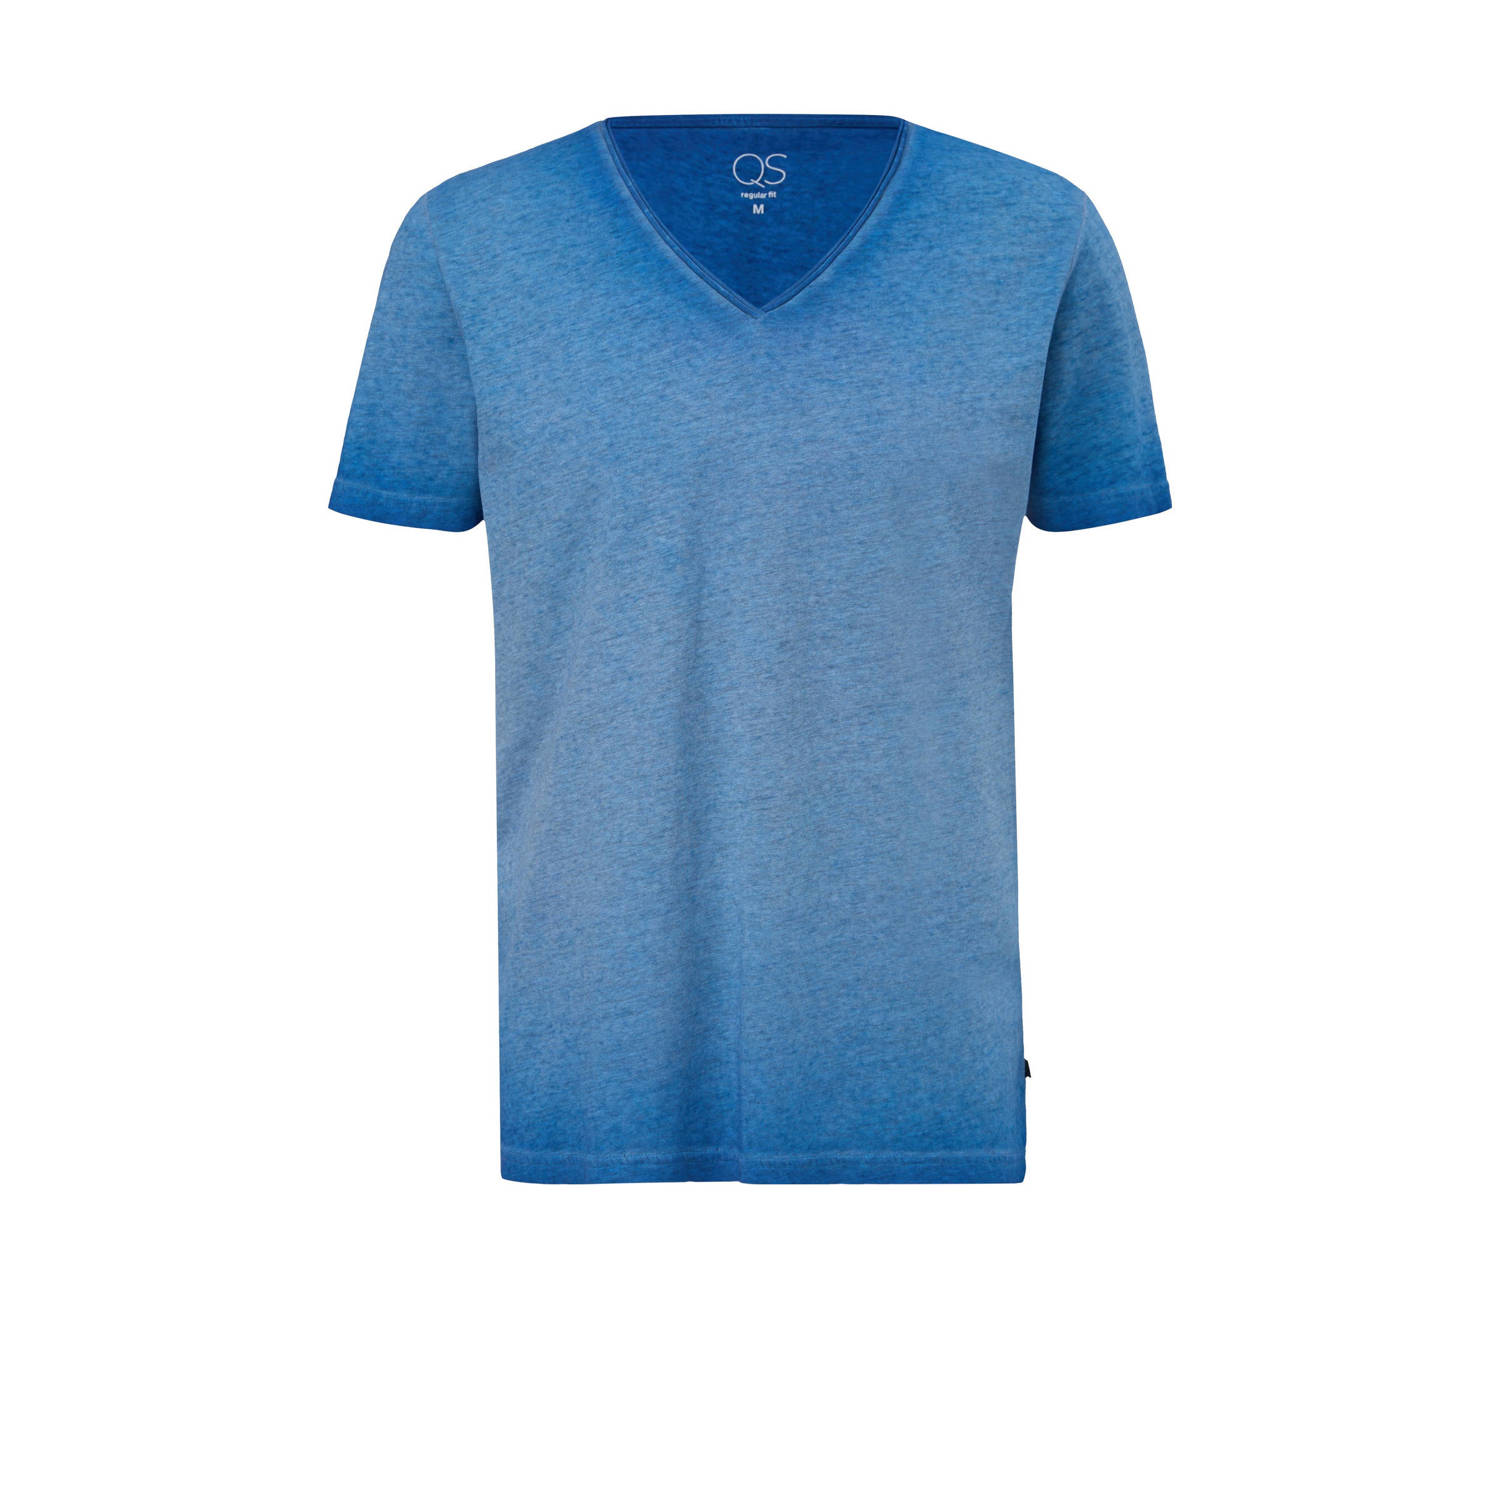 Q S by s.Oliver gemêleerd T-shirt blauw